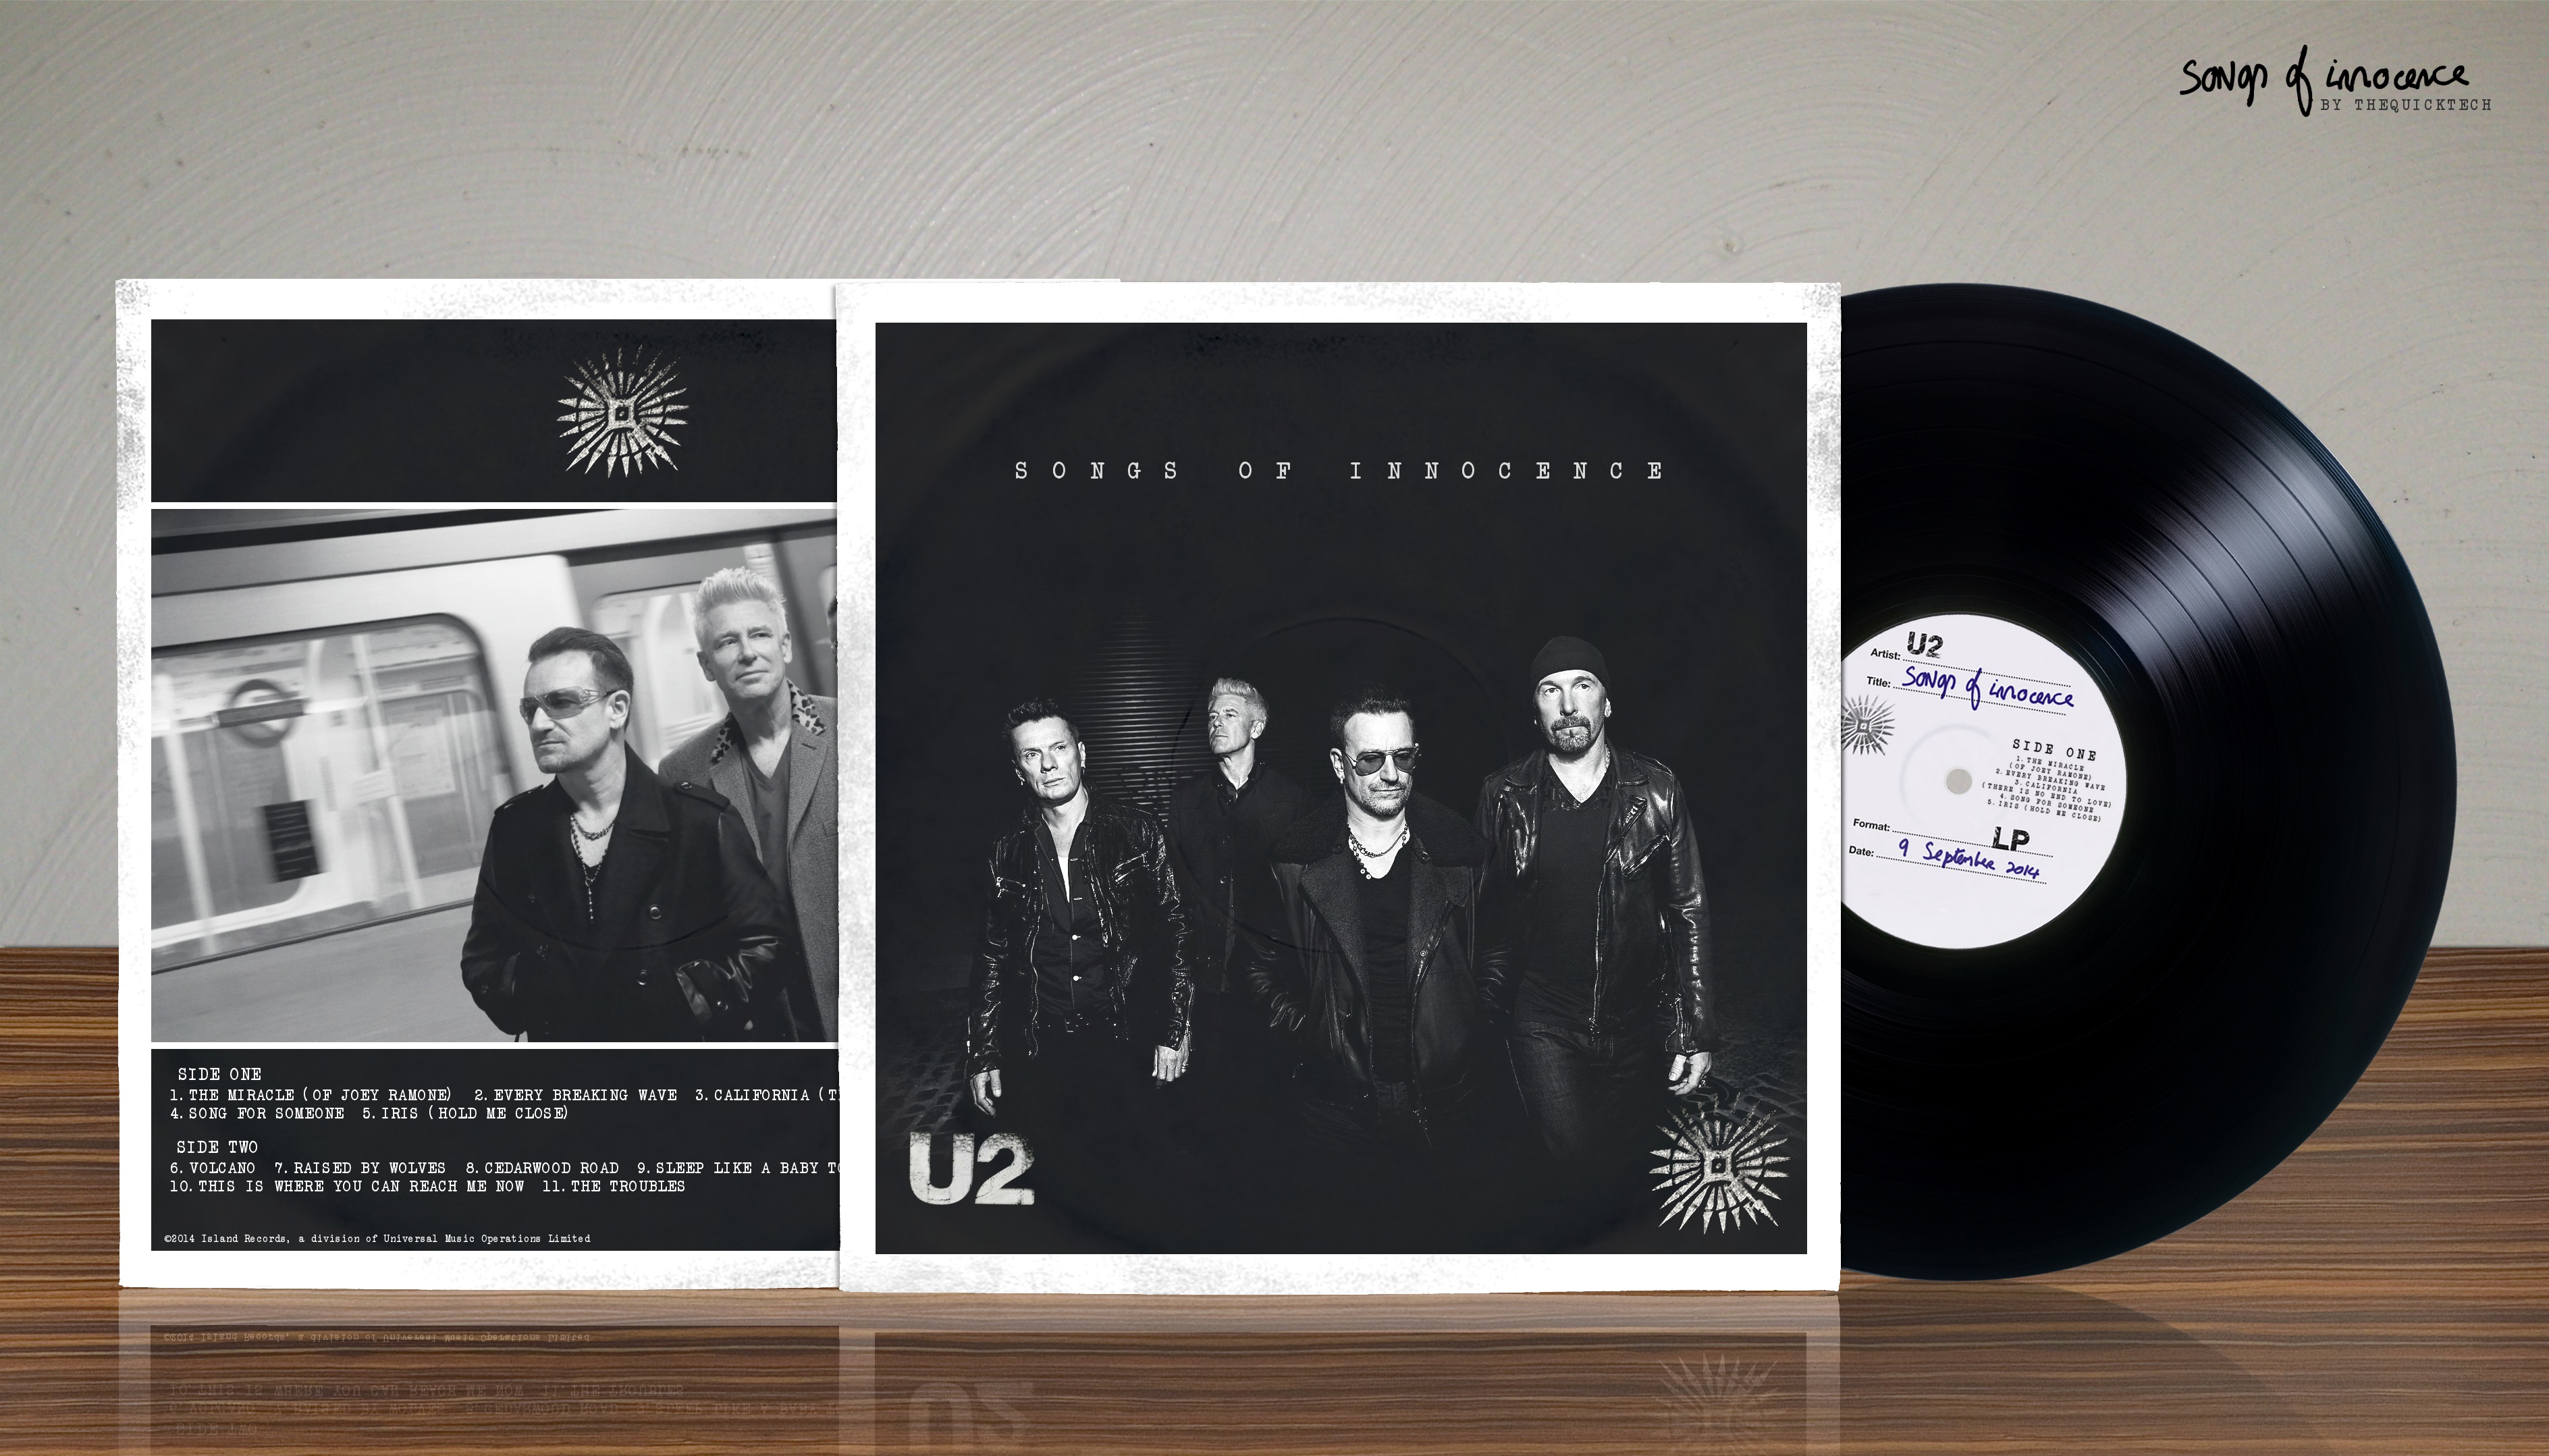 U2 - Songs of Innocence box cover